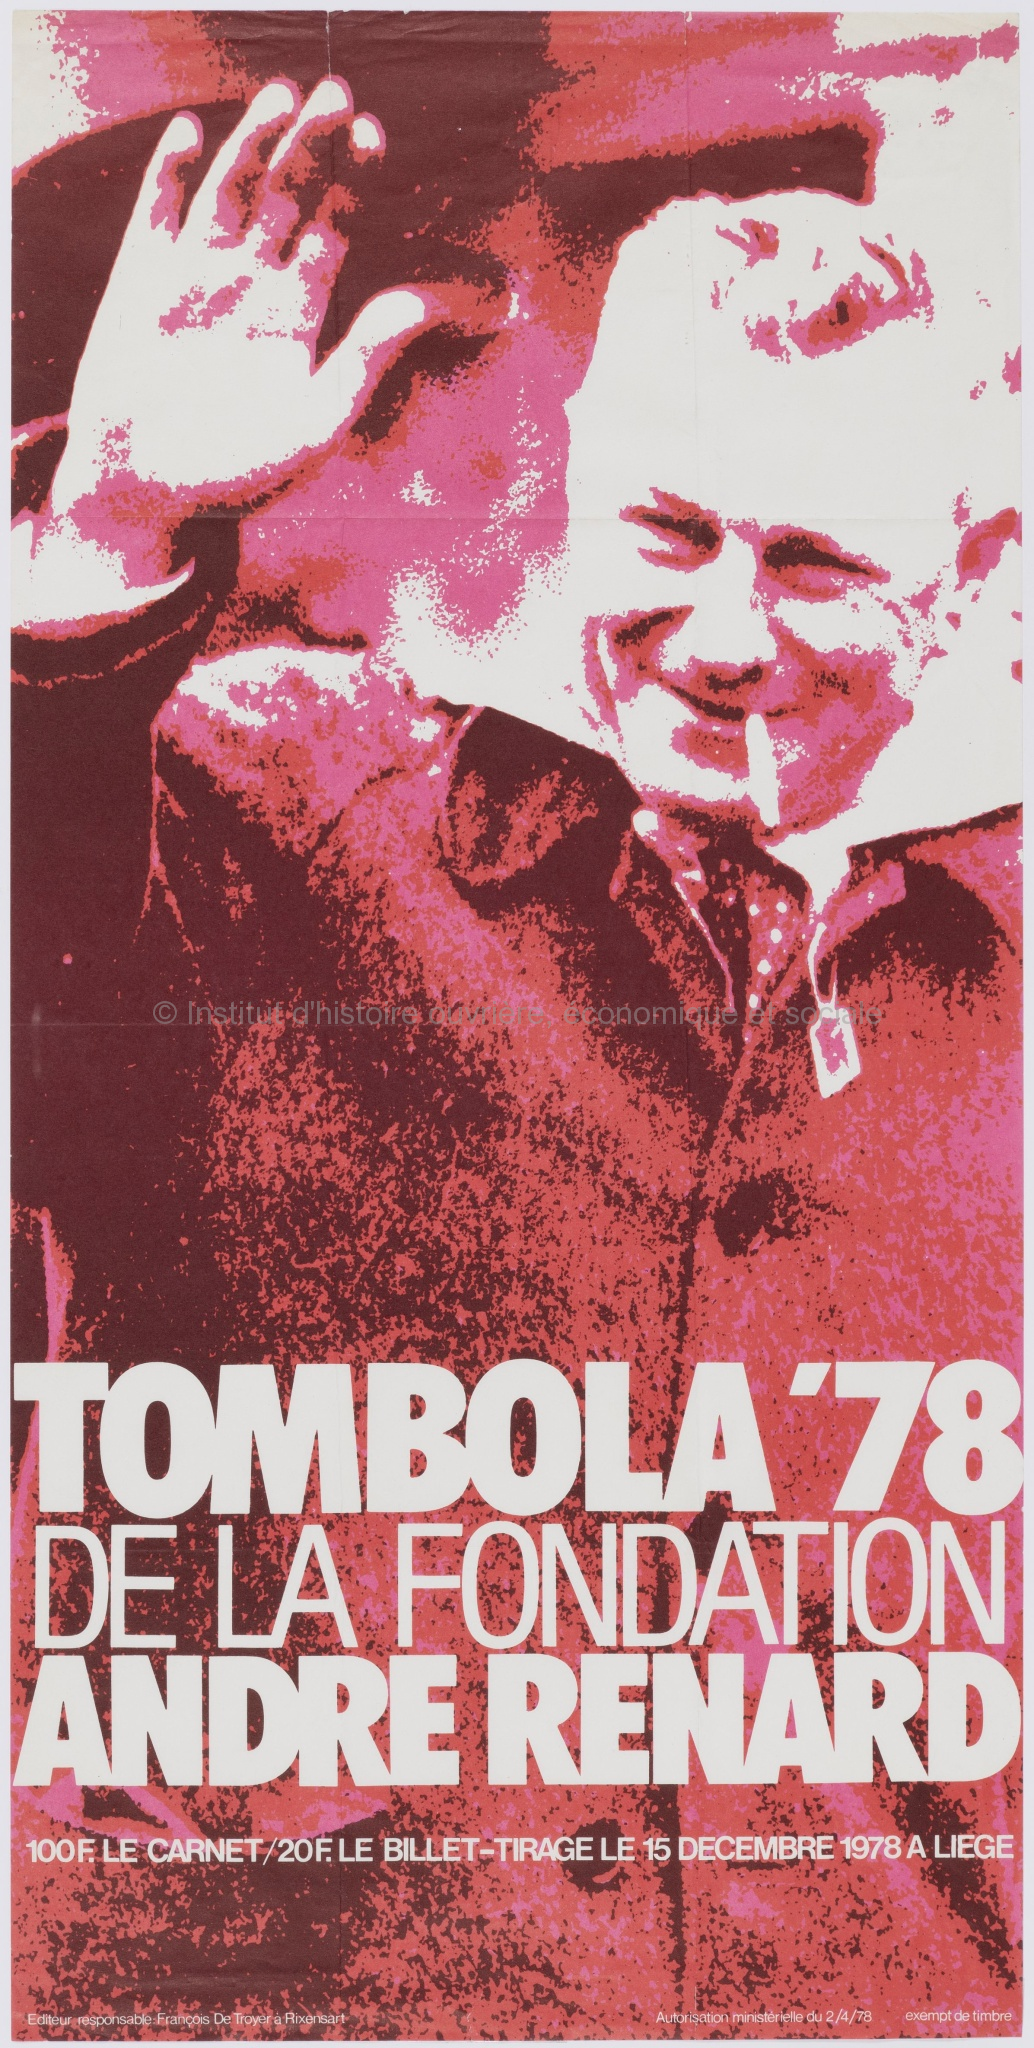 Tombola '78 de la Fondation André Renard